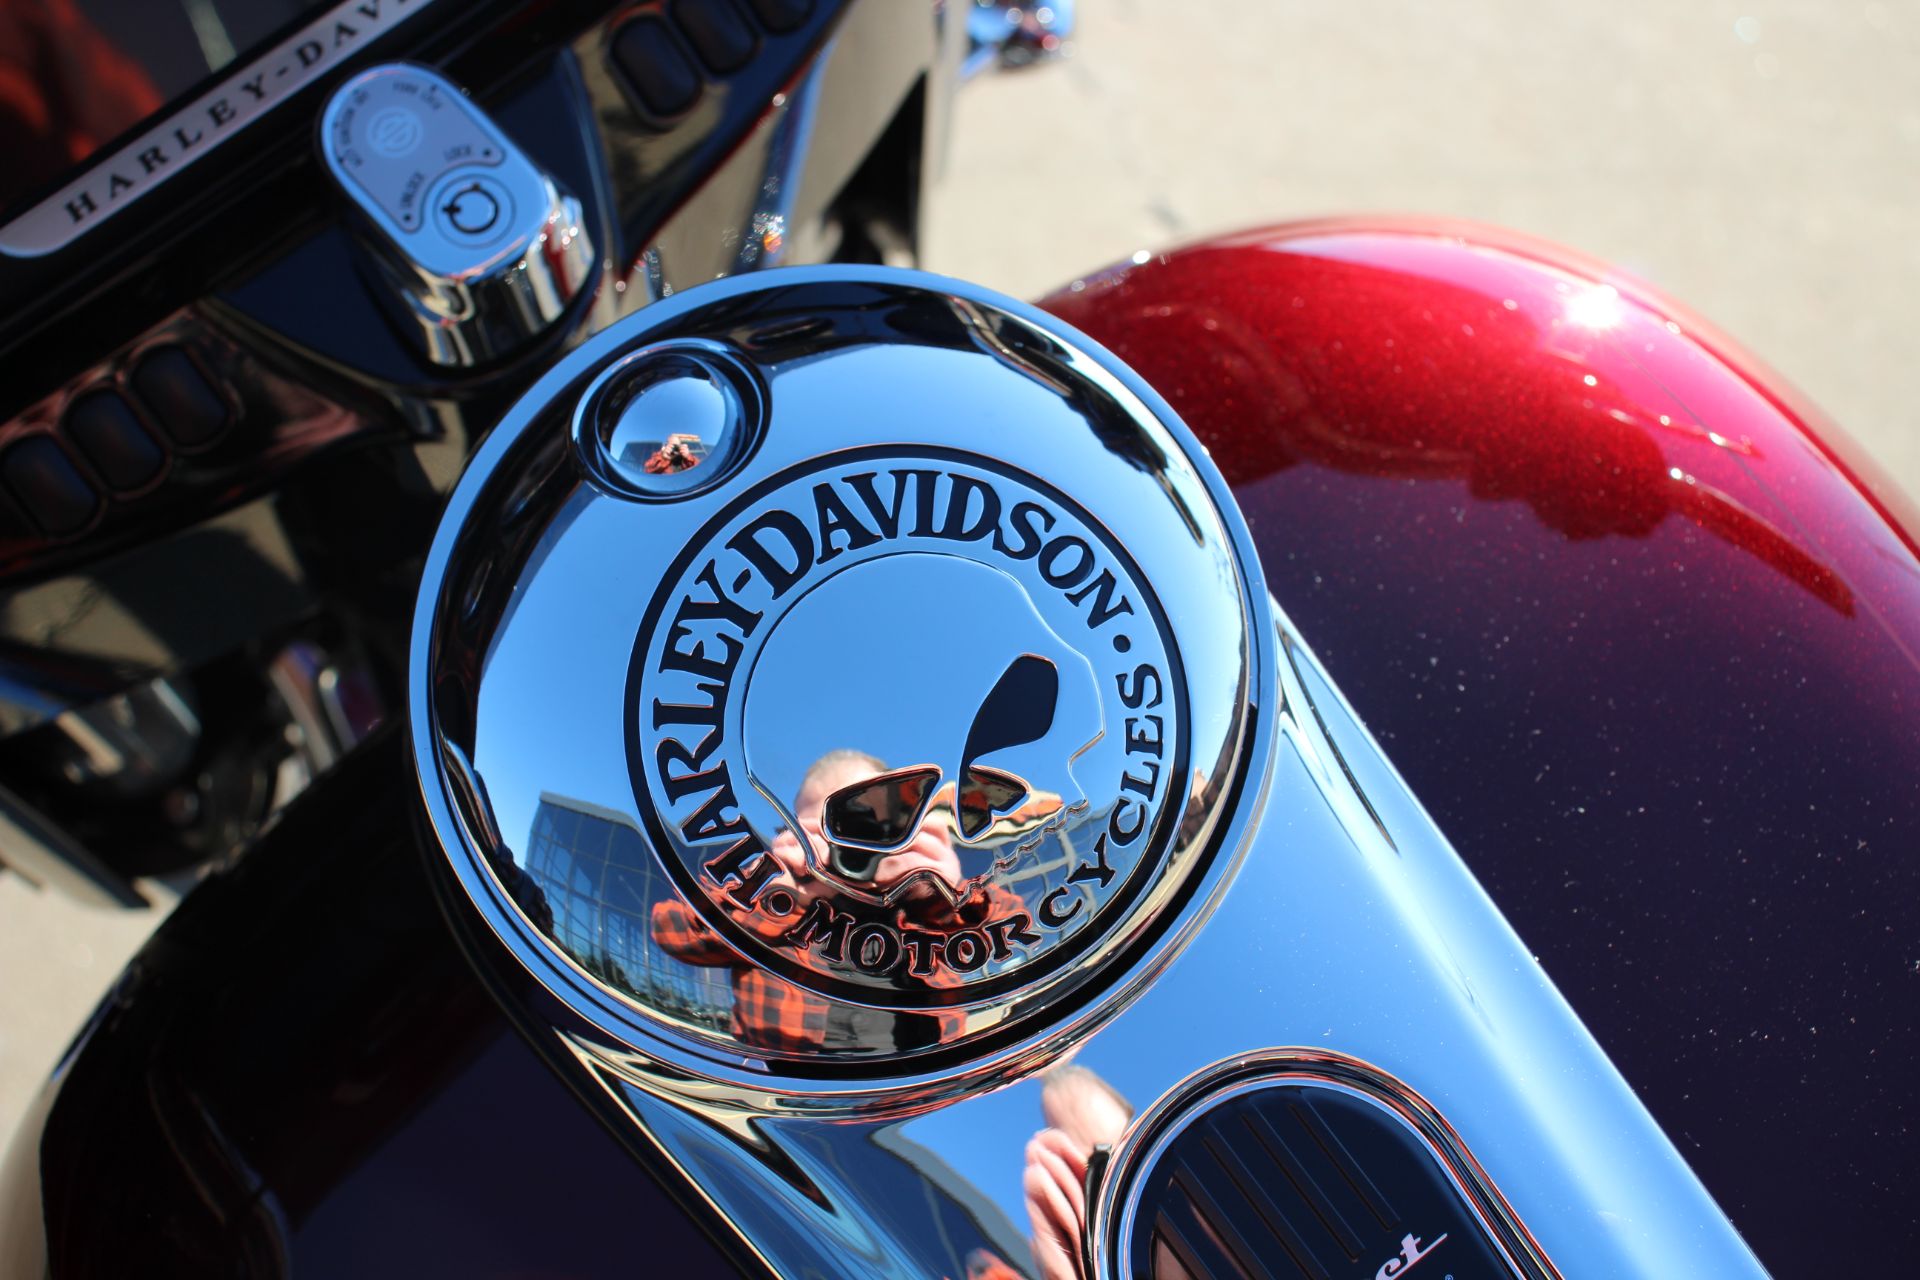 2014 Harley-Davidson Street Glide® Special in Flint, Michigan - Photo 10